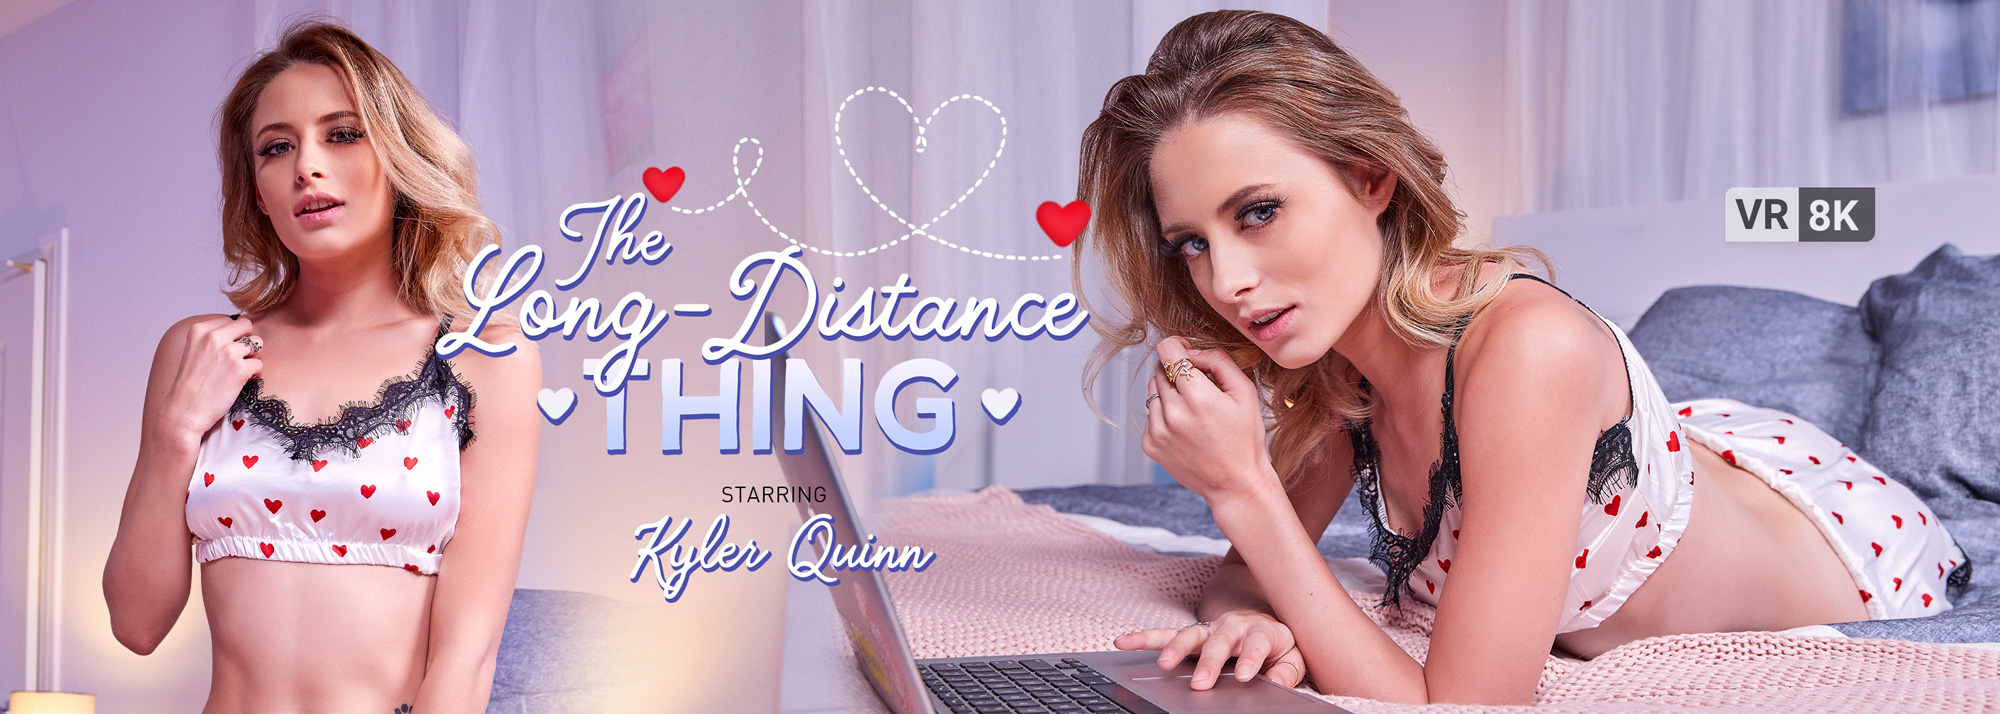 The Long-Distance Thing - VR Porn Video, Starring: Kyler Quinn